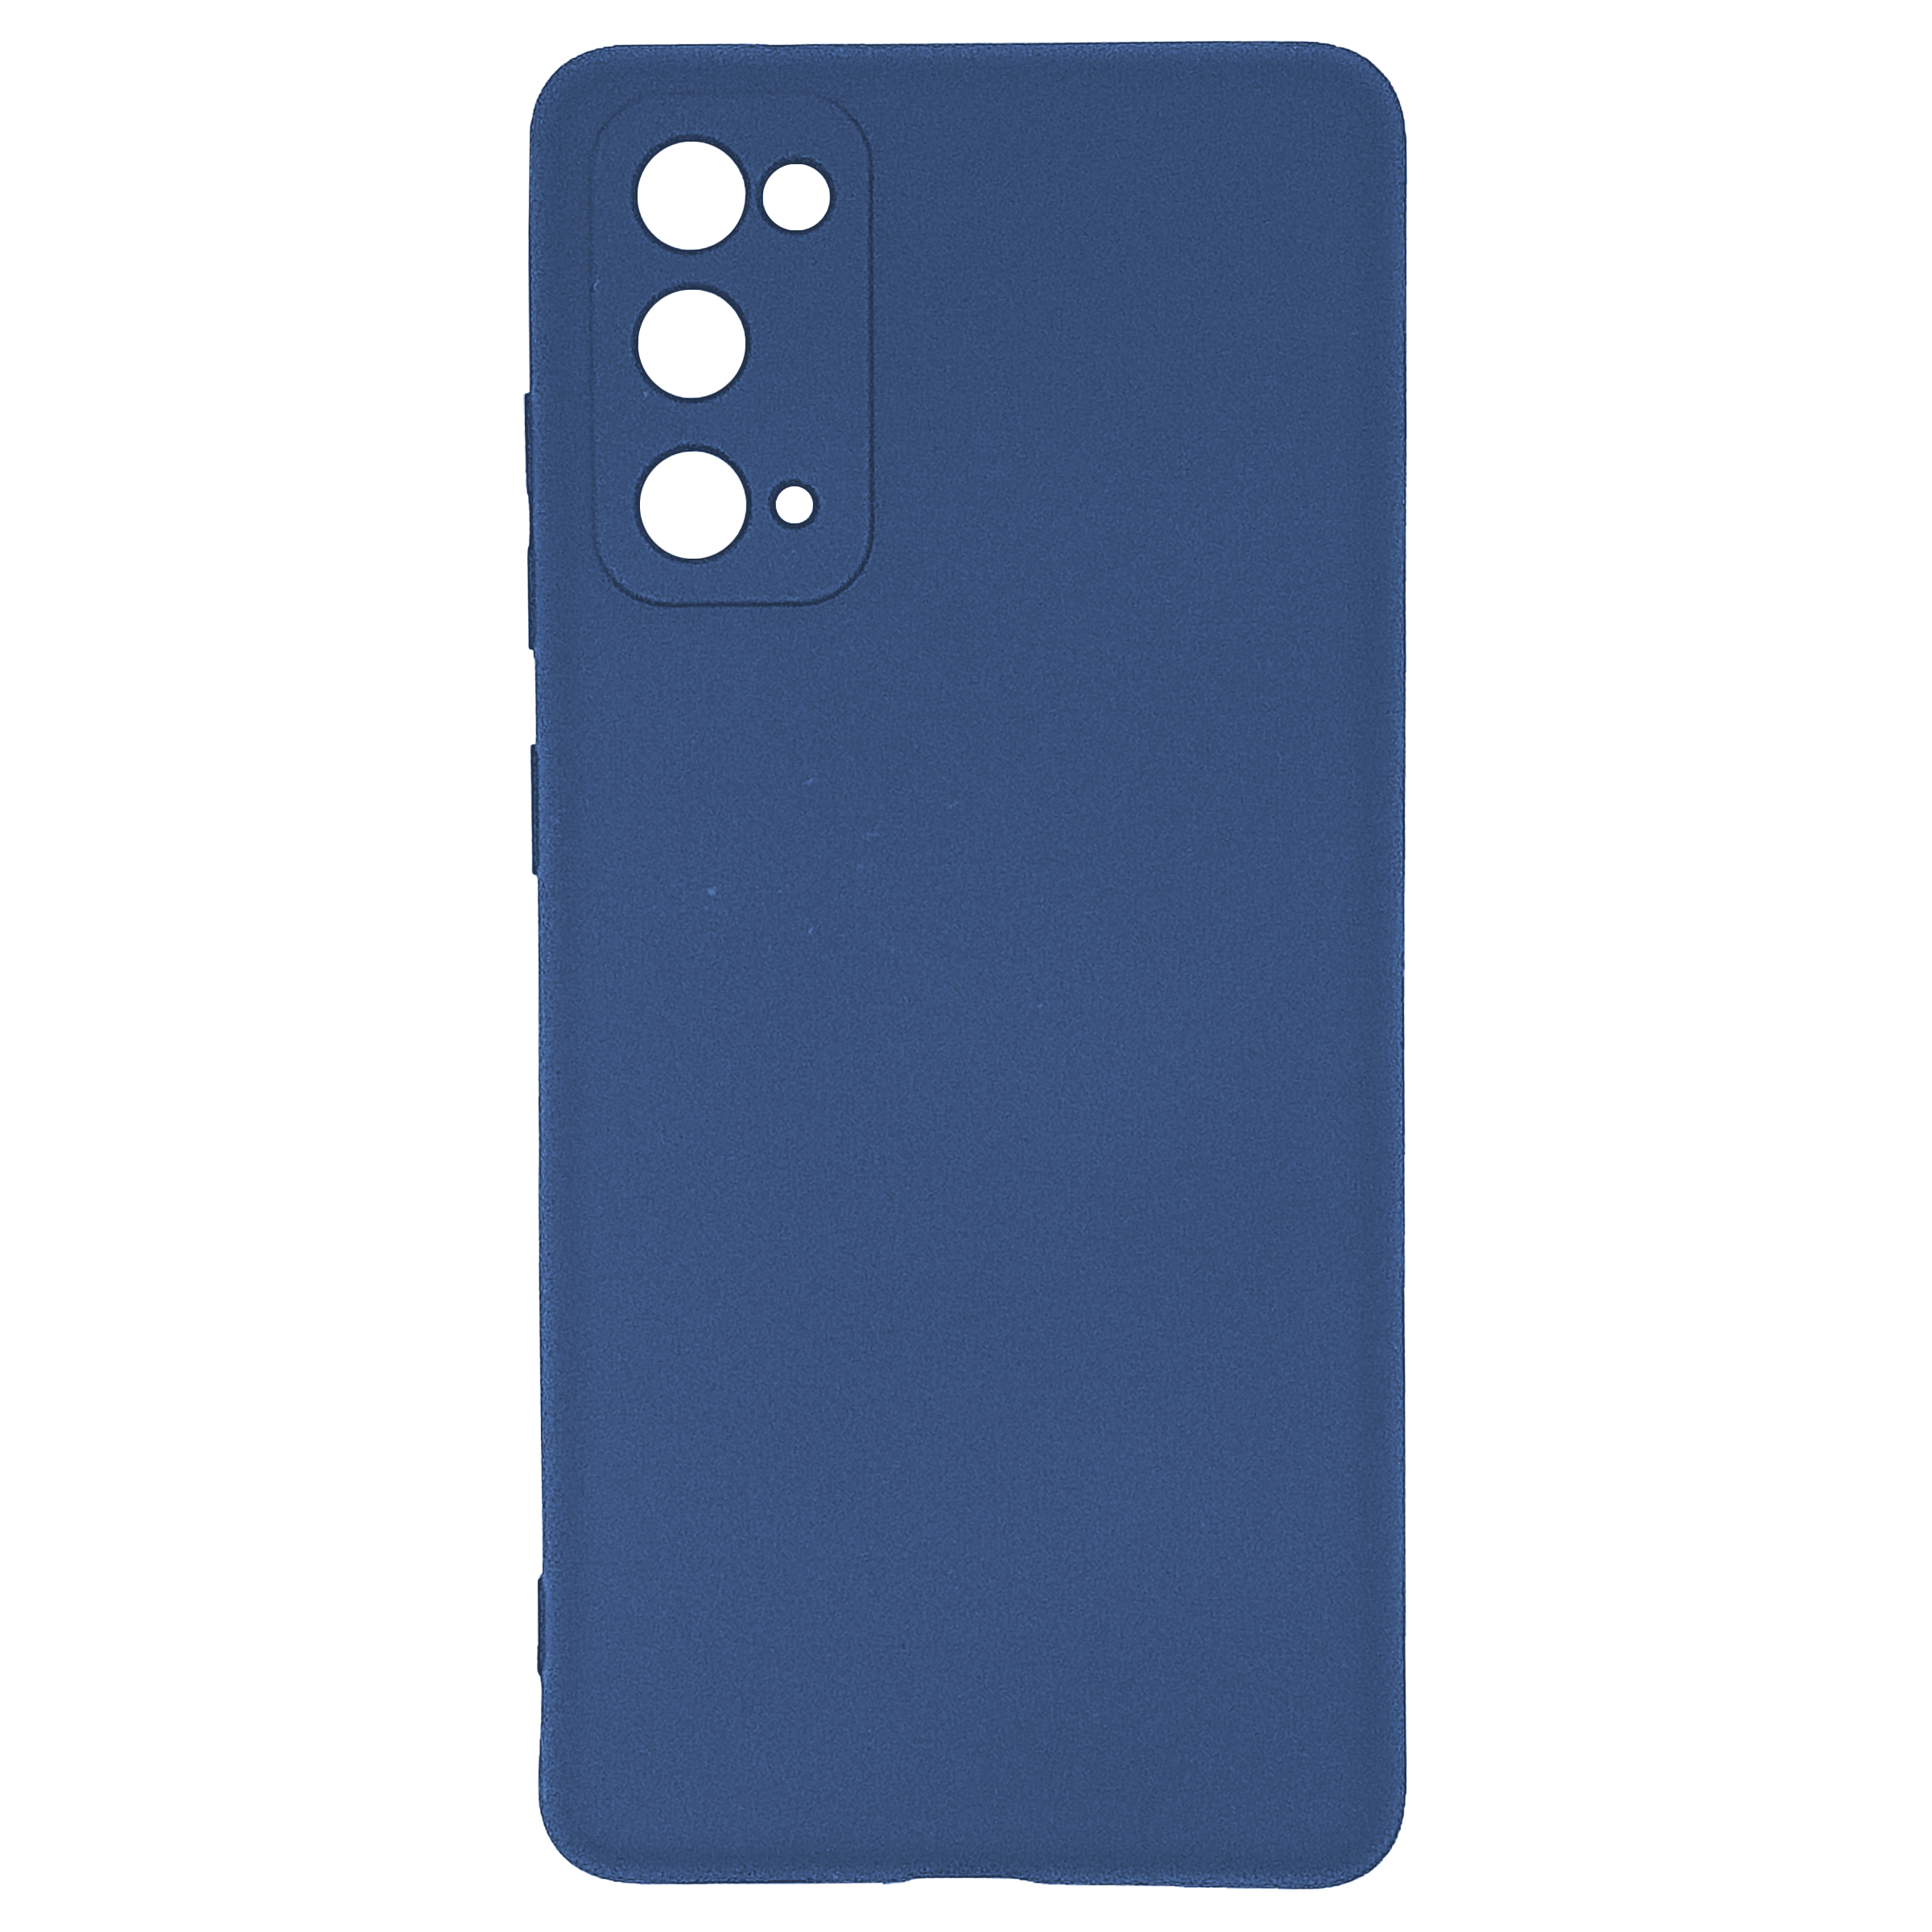 Soundrevo TPU Back Case For Samsung Galaxy S20 FE 5G (Anti-Slip, C020FE, Blue)_1